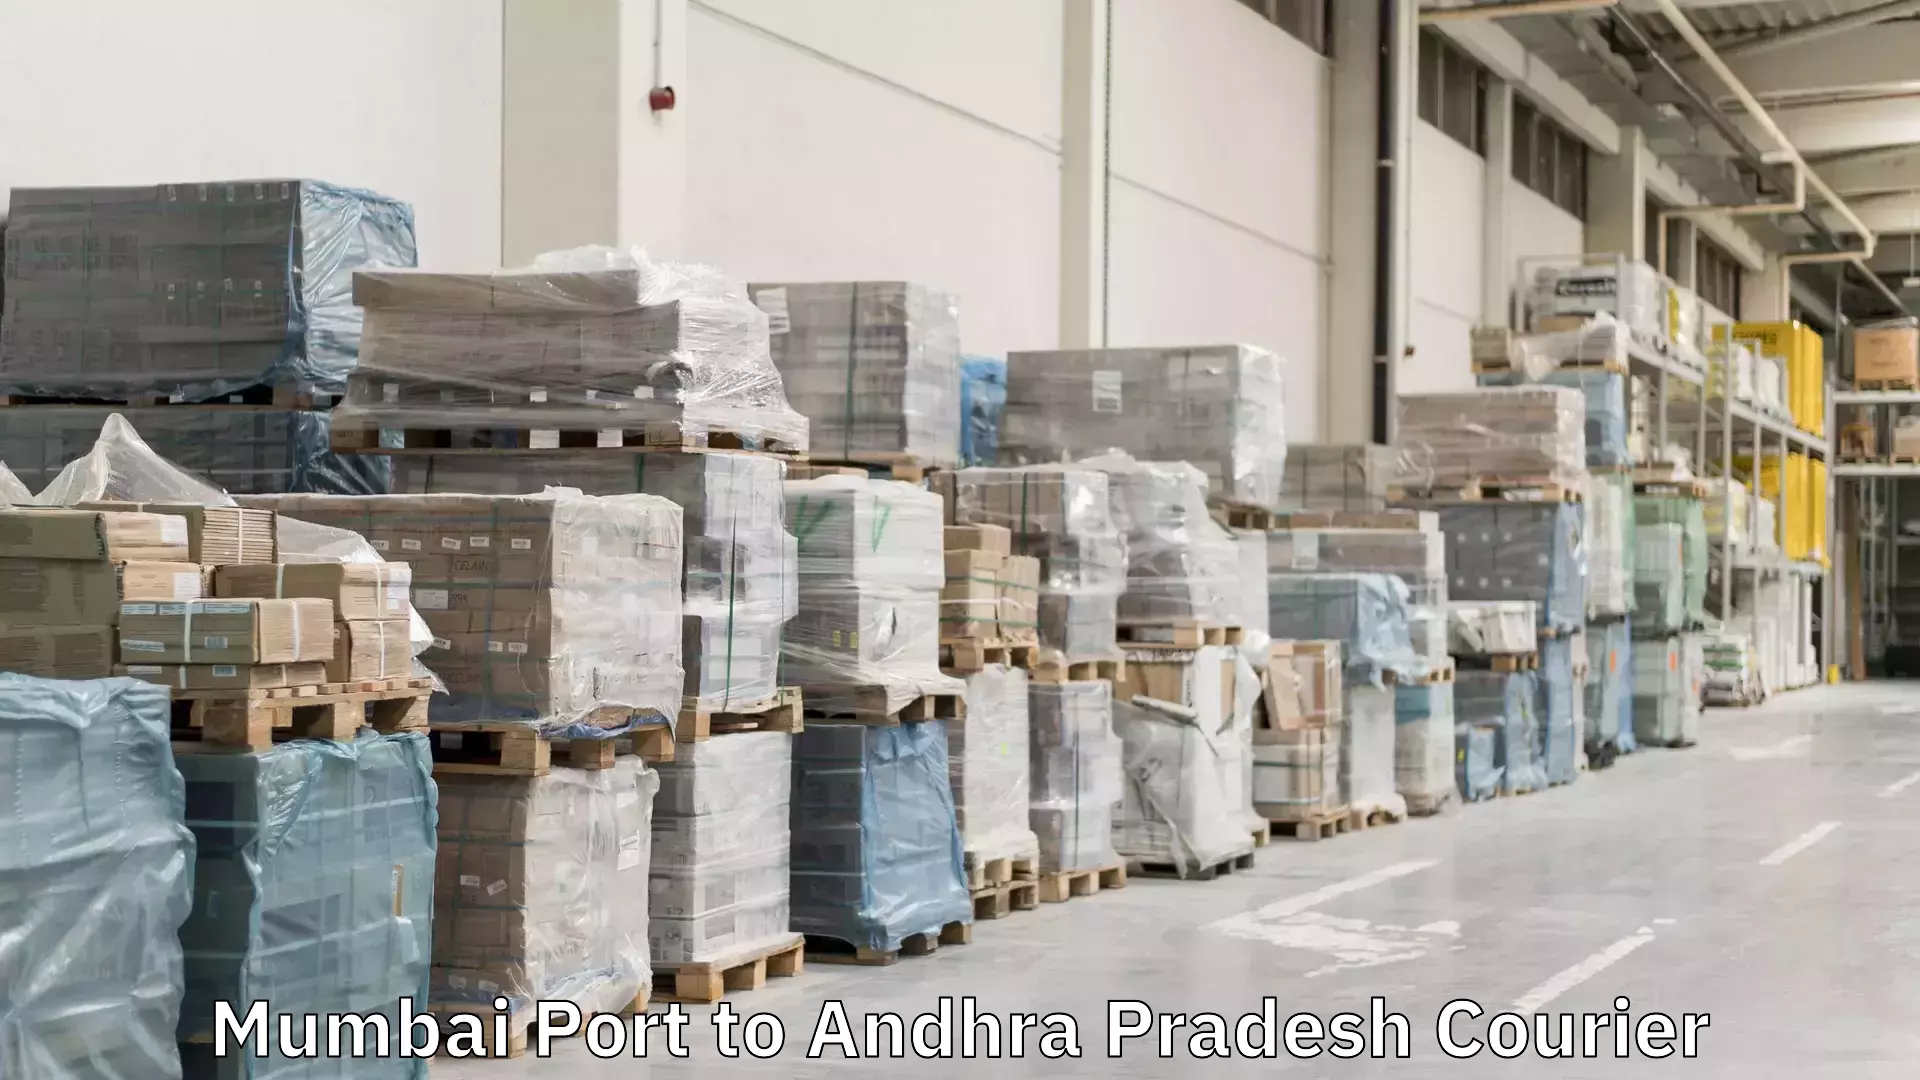 Express logistics providers Mumbai Port to Andhra Pradesh